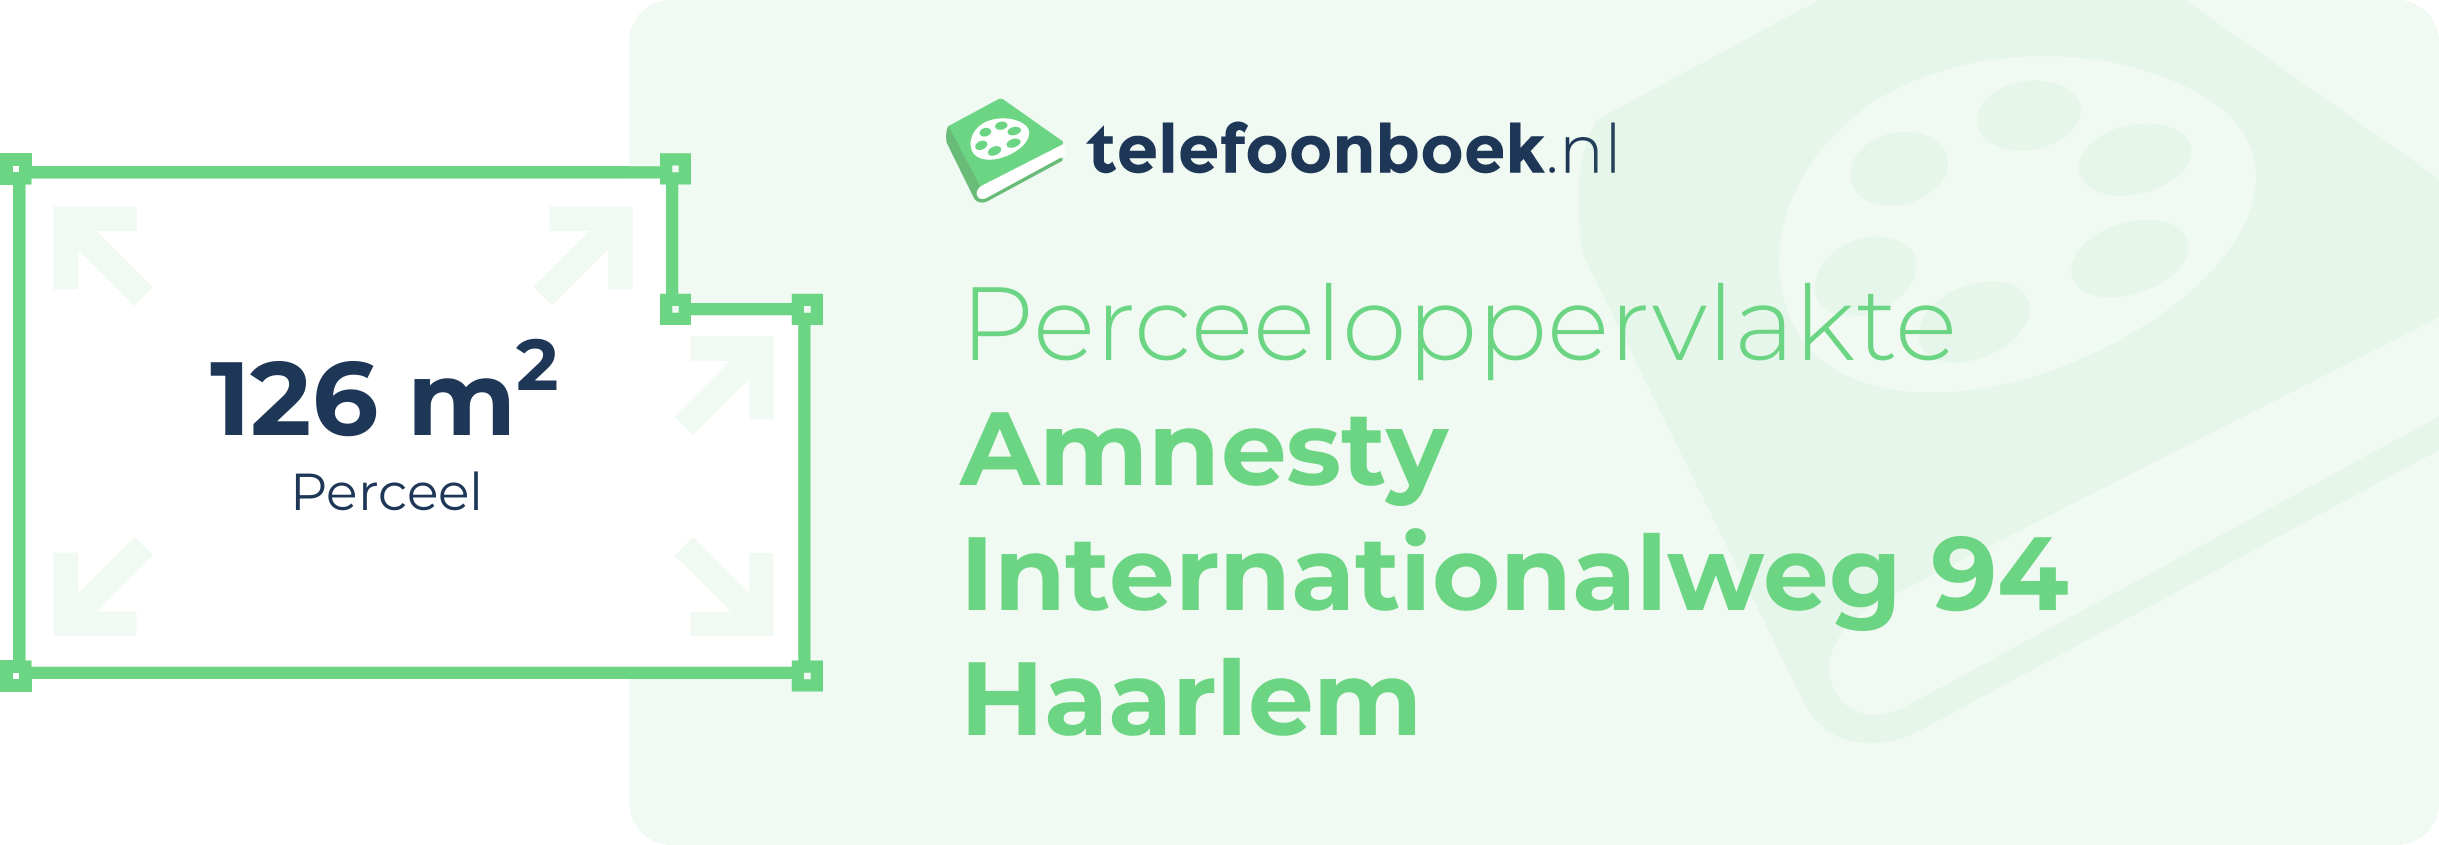 Perceeloppervlakte Amnesty Internationalweg 94 Haarlem